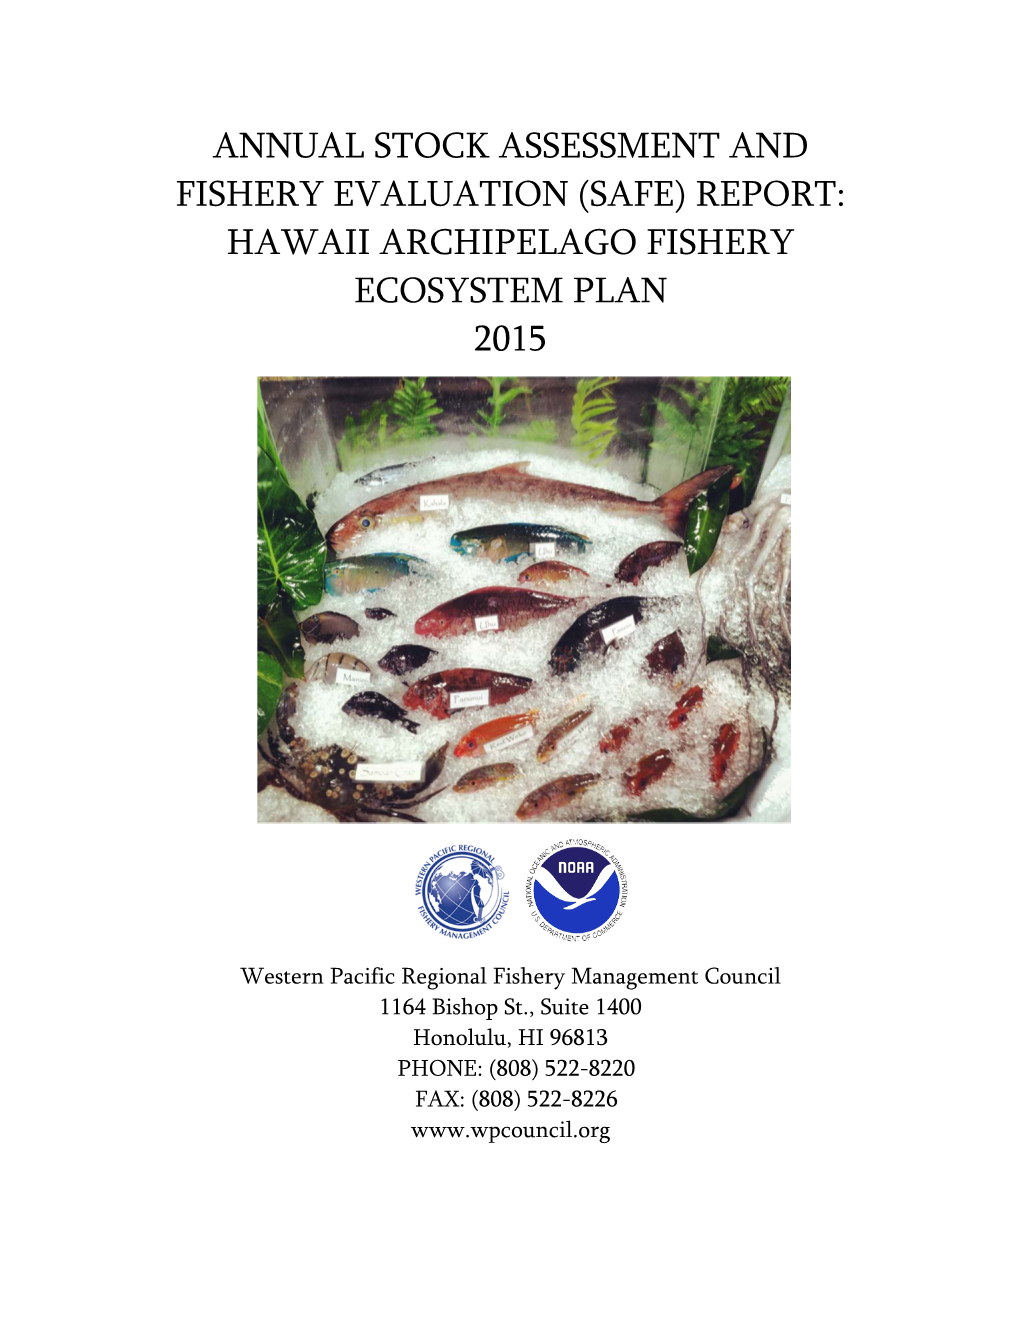 (Safe) Report: Hawaii Archipelago Fishery Ecosystem Plan 2015